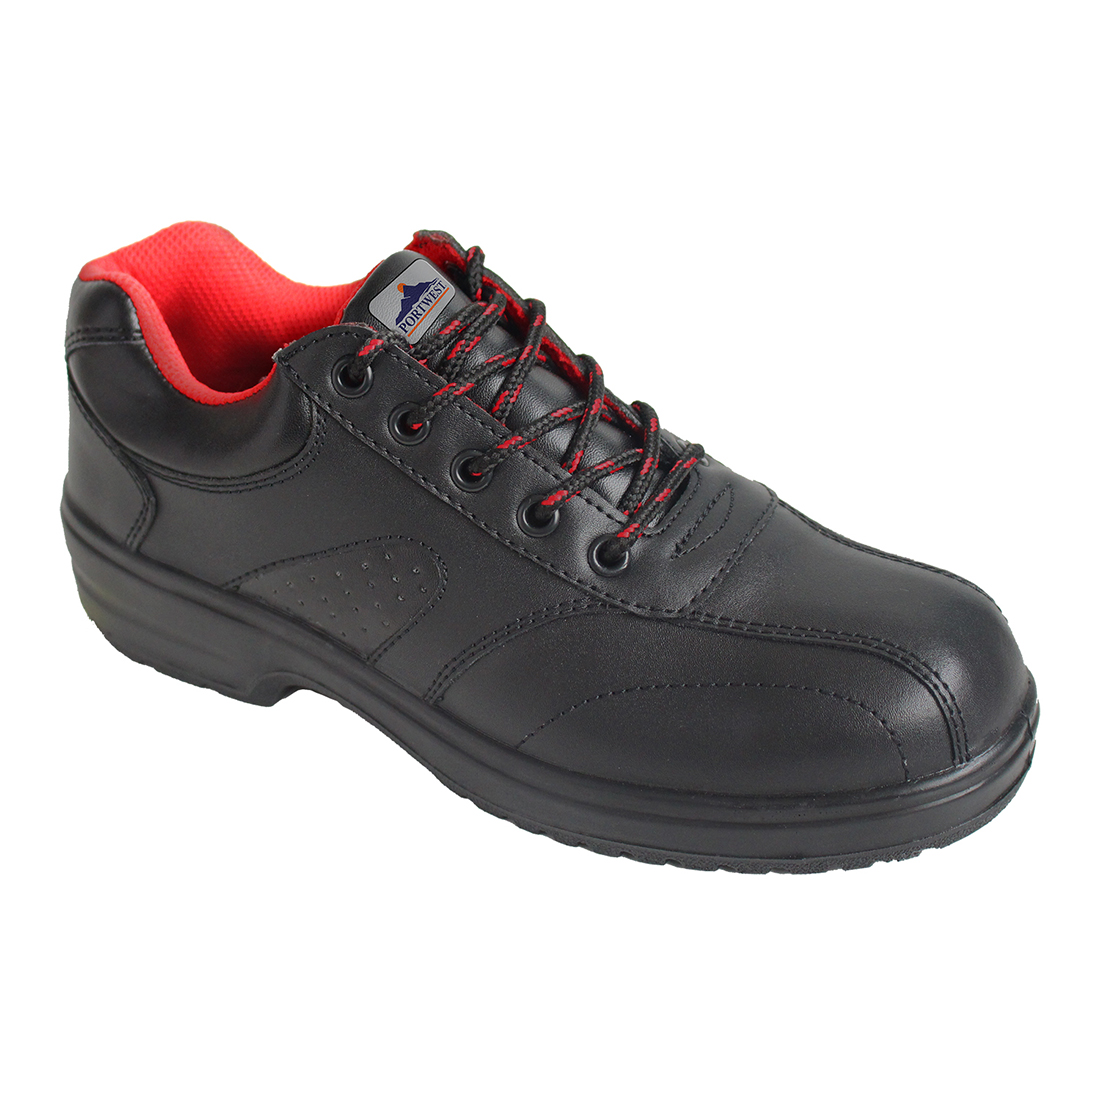 Steelite Women's Safety Shoe S1 - Black